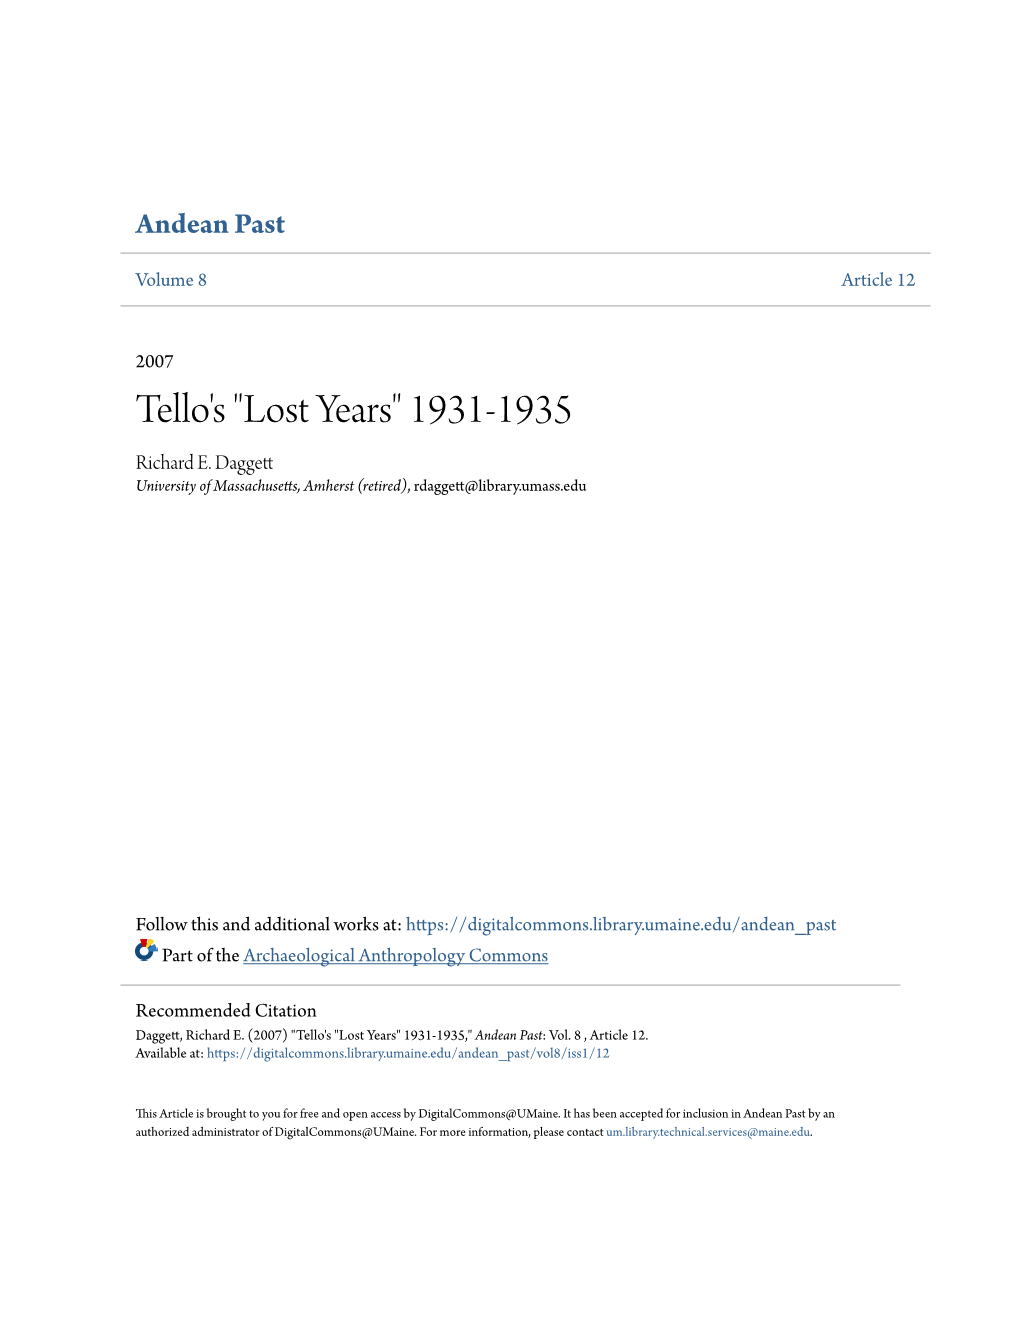 Tello's "Lost Years" 1931-1935 Richard E